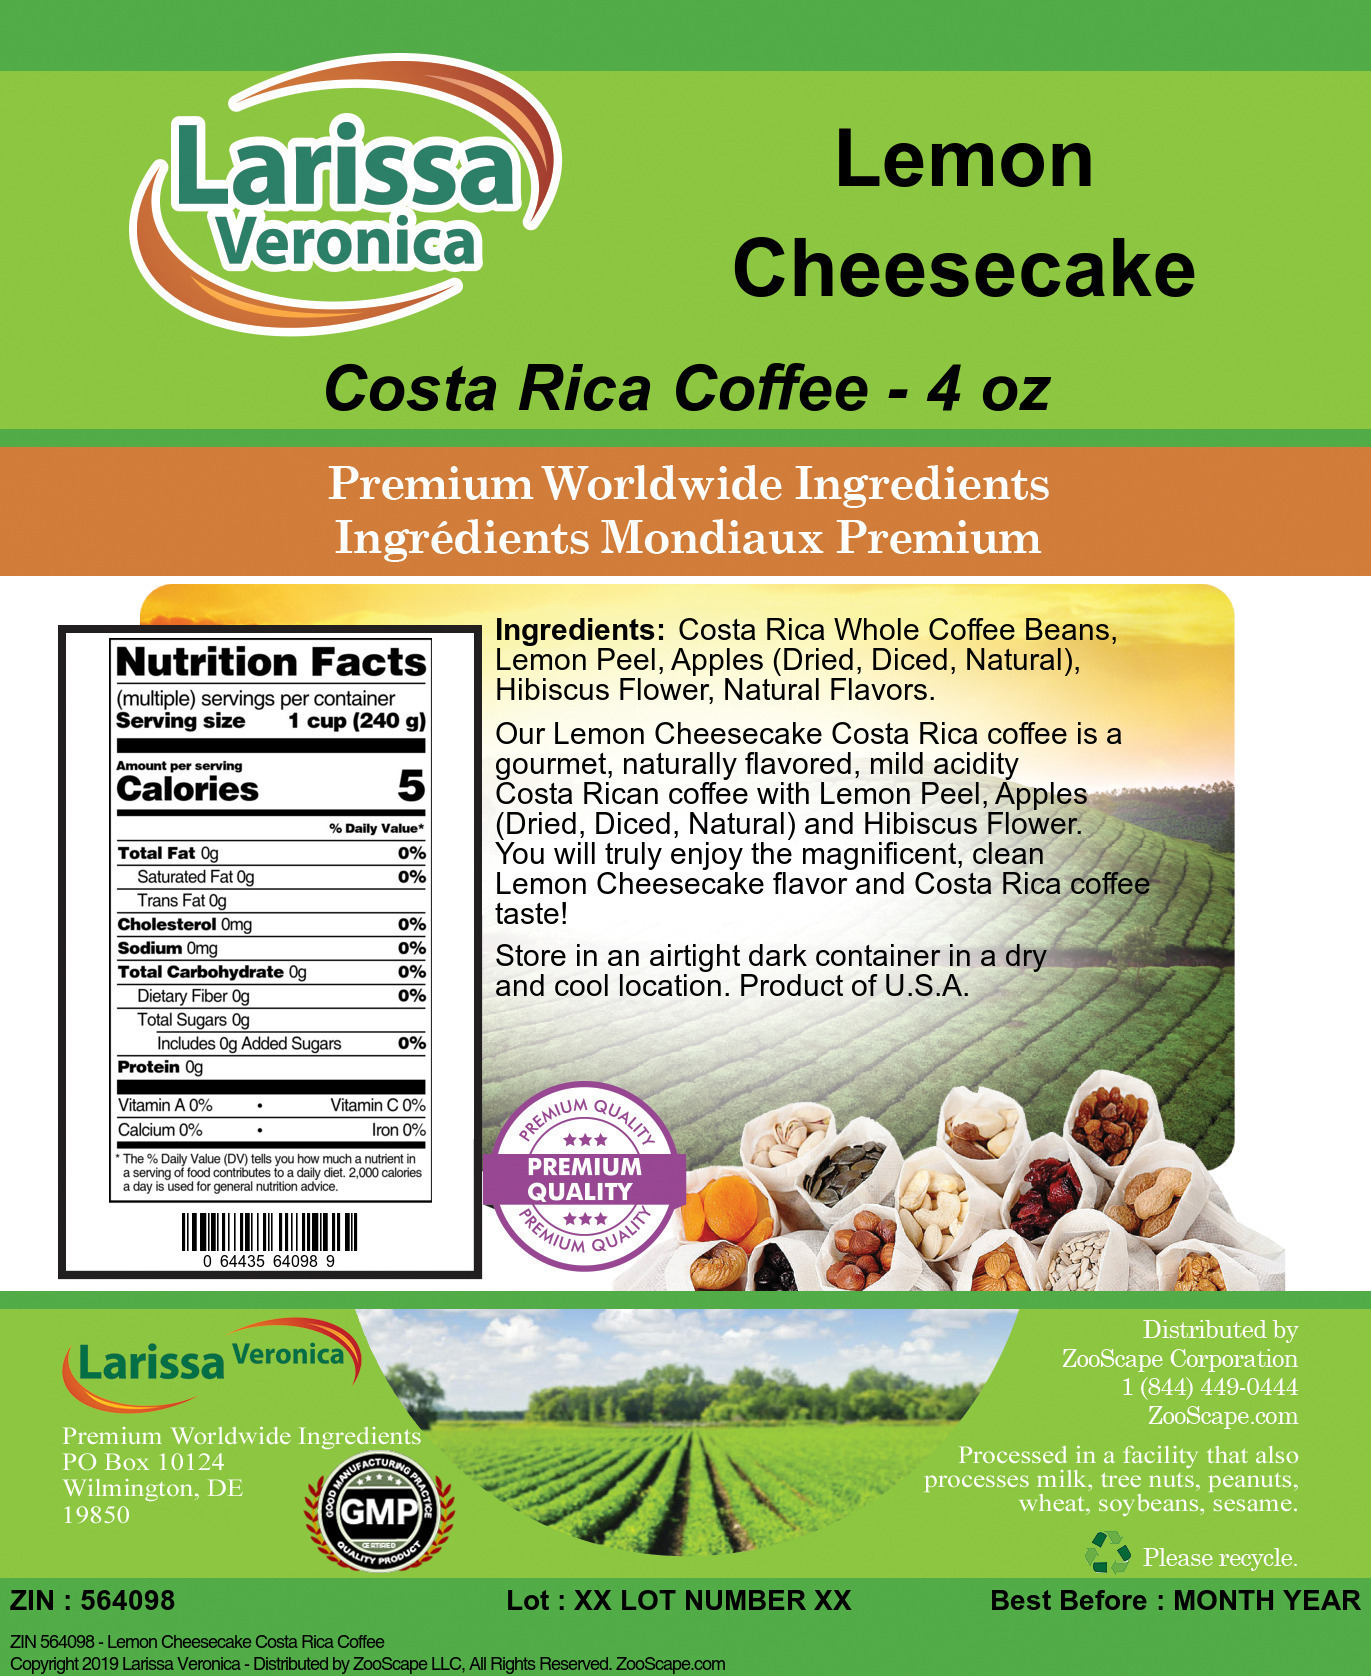 Lemon Cheesecake Costa Rica Coffee - Label